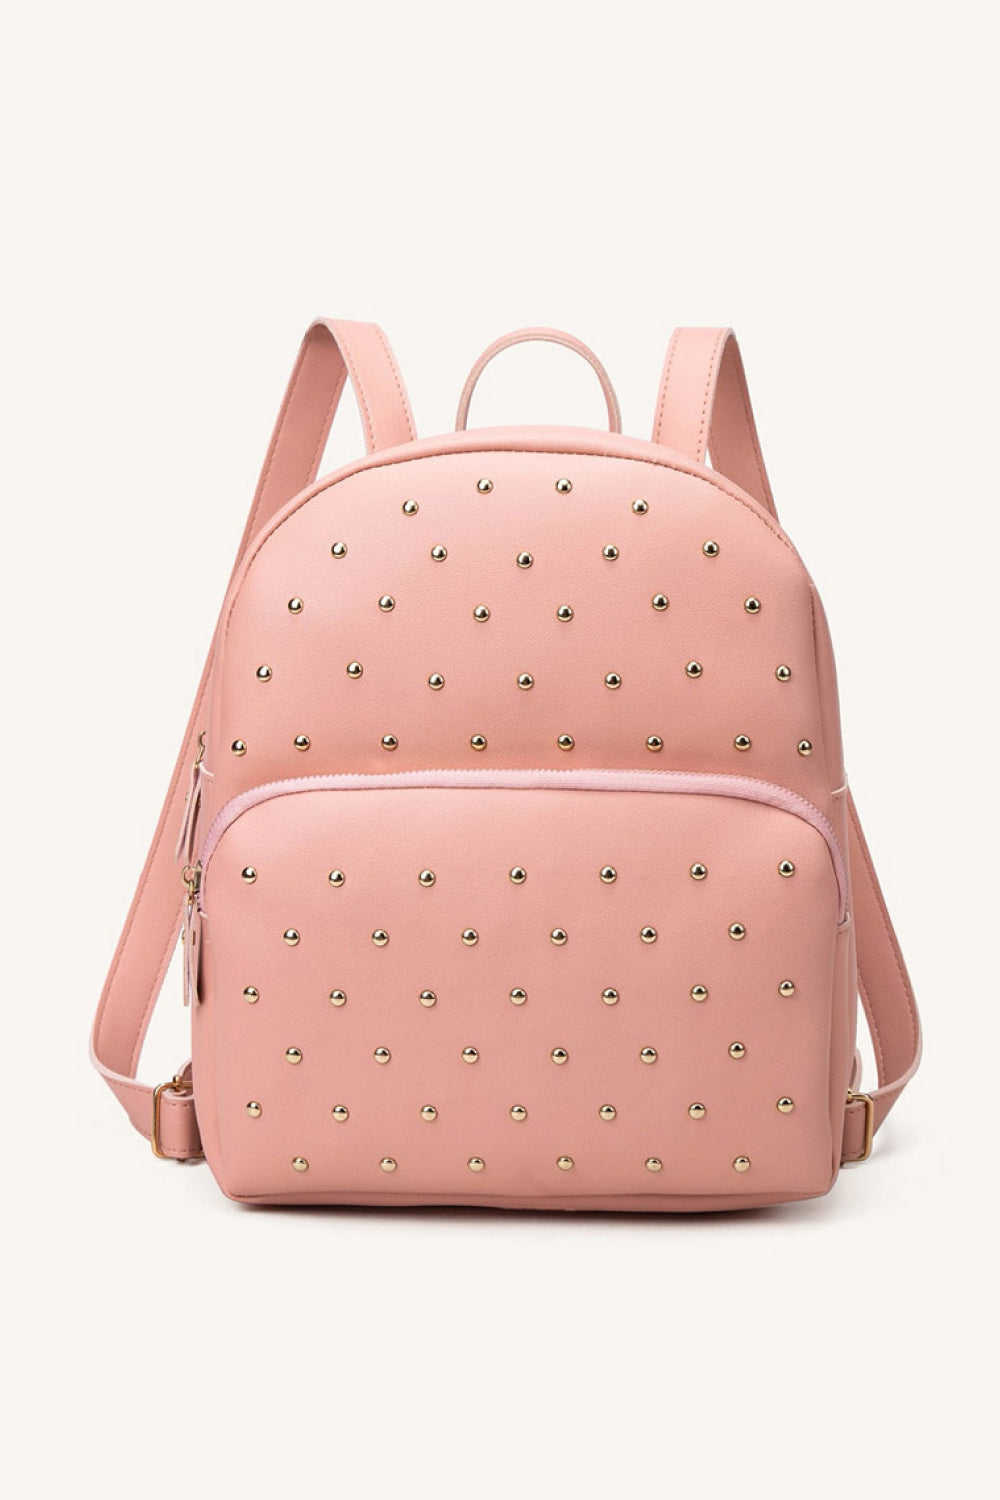 Studded PU Leather Backpack - Handbag - FITGGINS